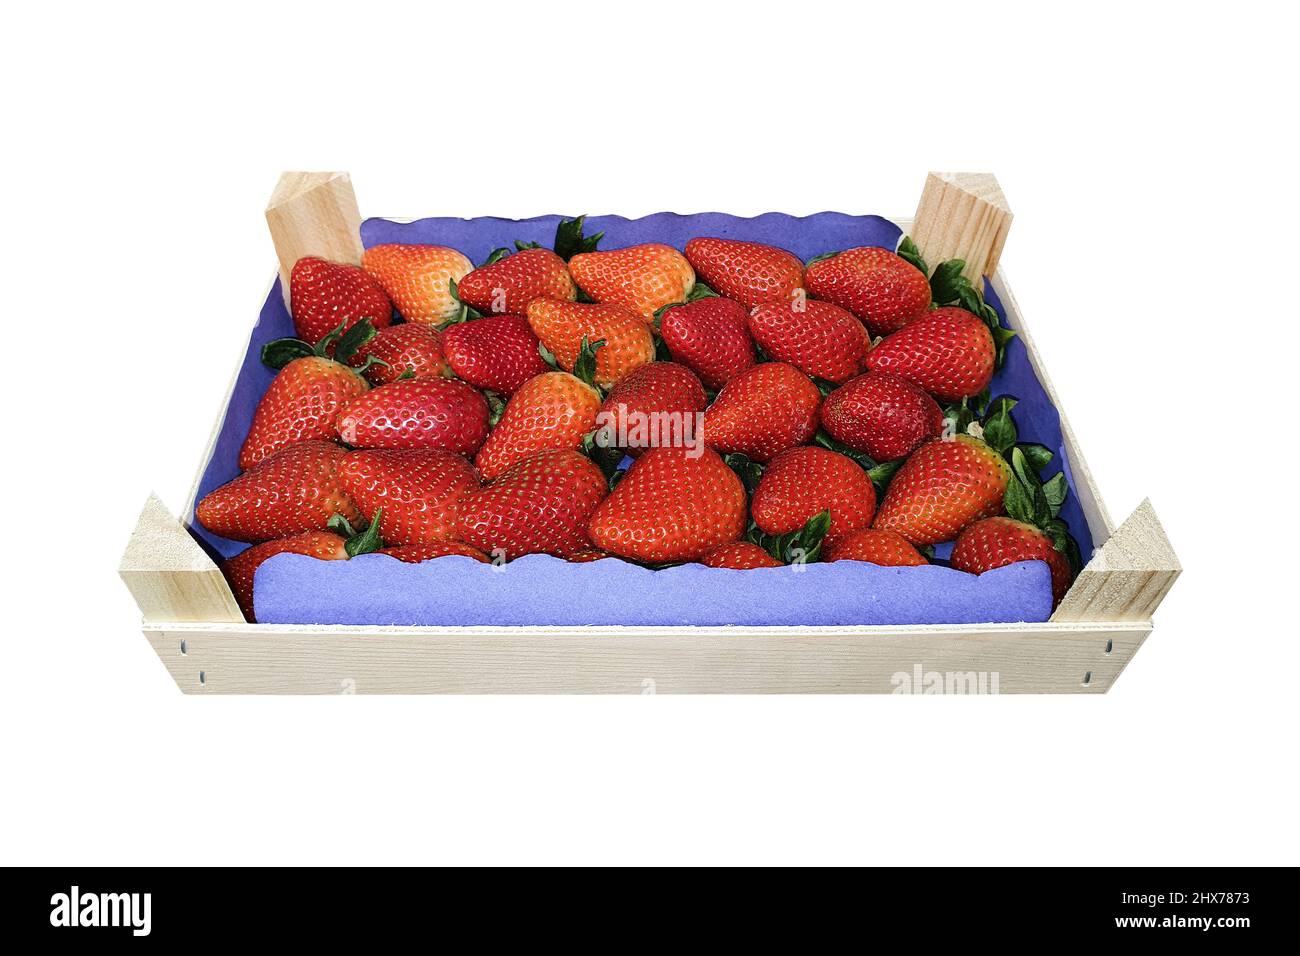 https://c8.alamy.com/compes/2hx7873/fresas-en-caja-de-madera-fruta-organica-2hx7873.jpg